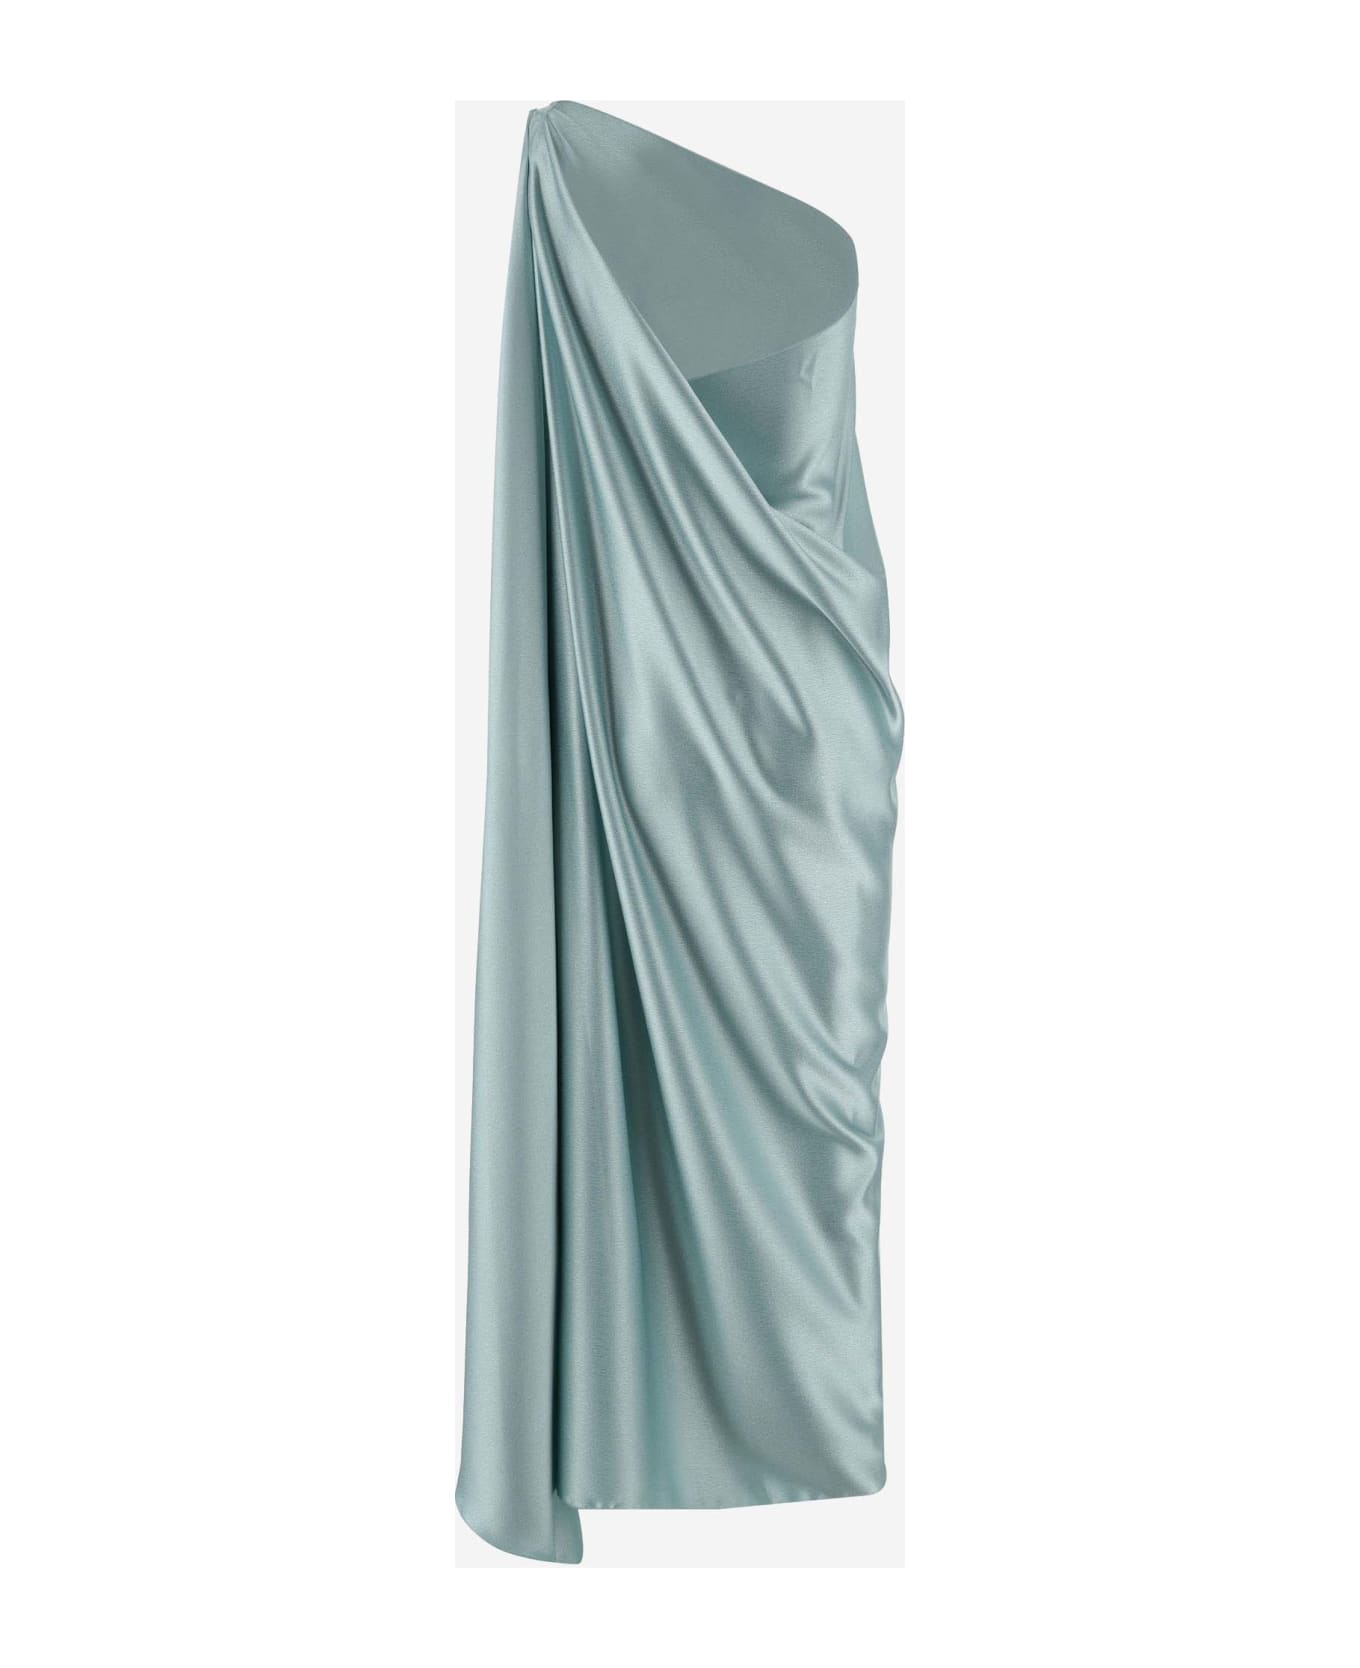 Stephan Janson Draped Satin Dress - Light Blue